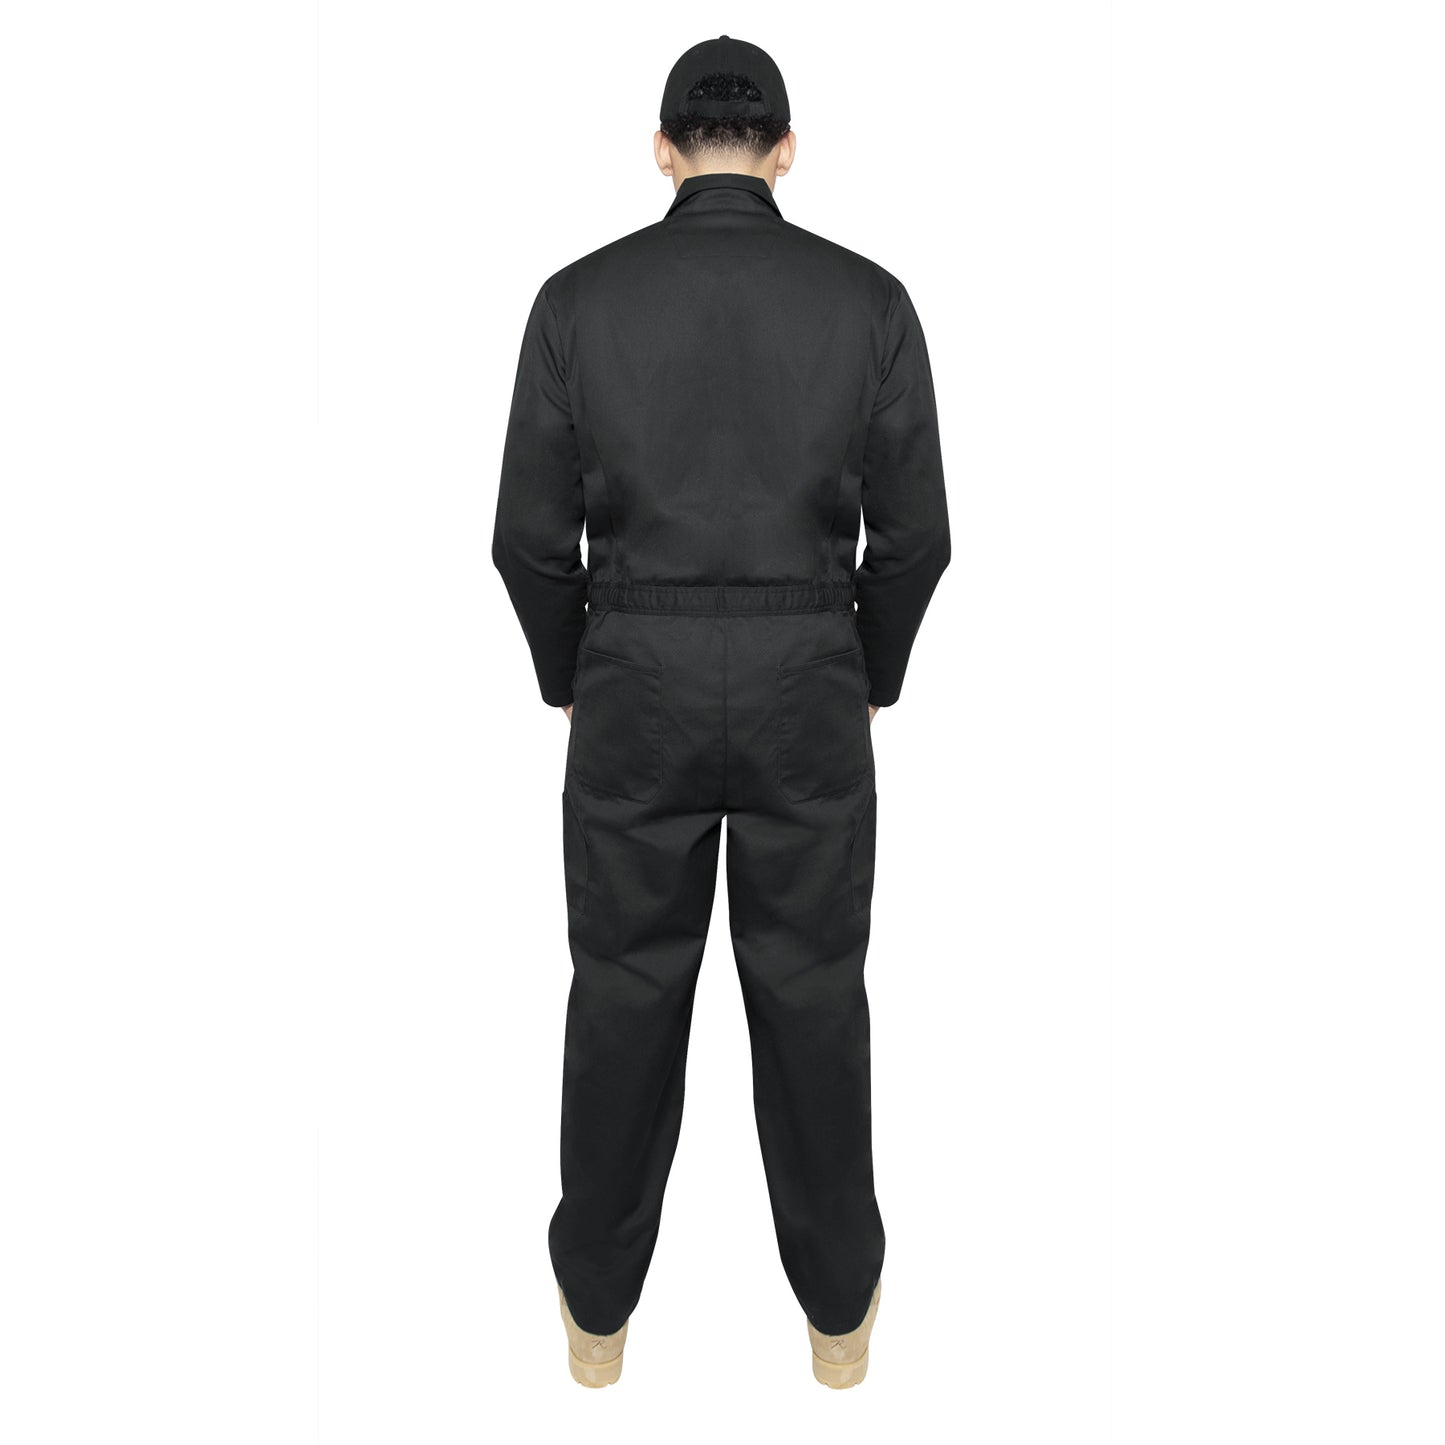 Men's Black or Midnight Navy Blue Workwear Coverall Mechanic Jumpsuit Uniform